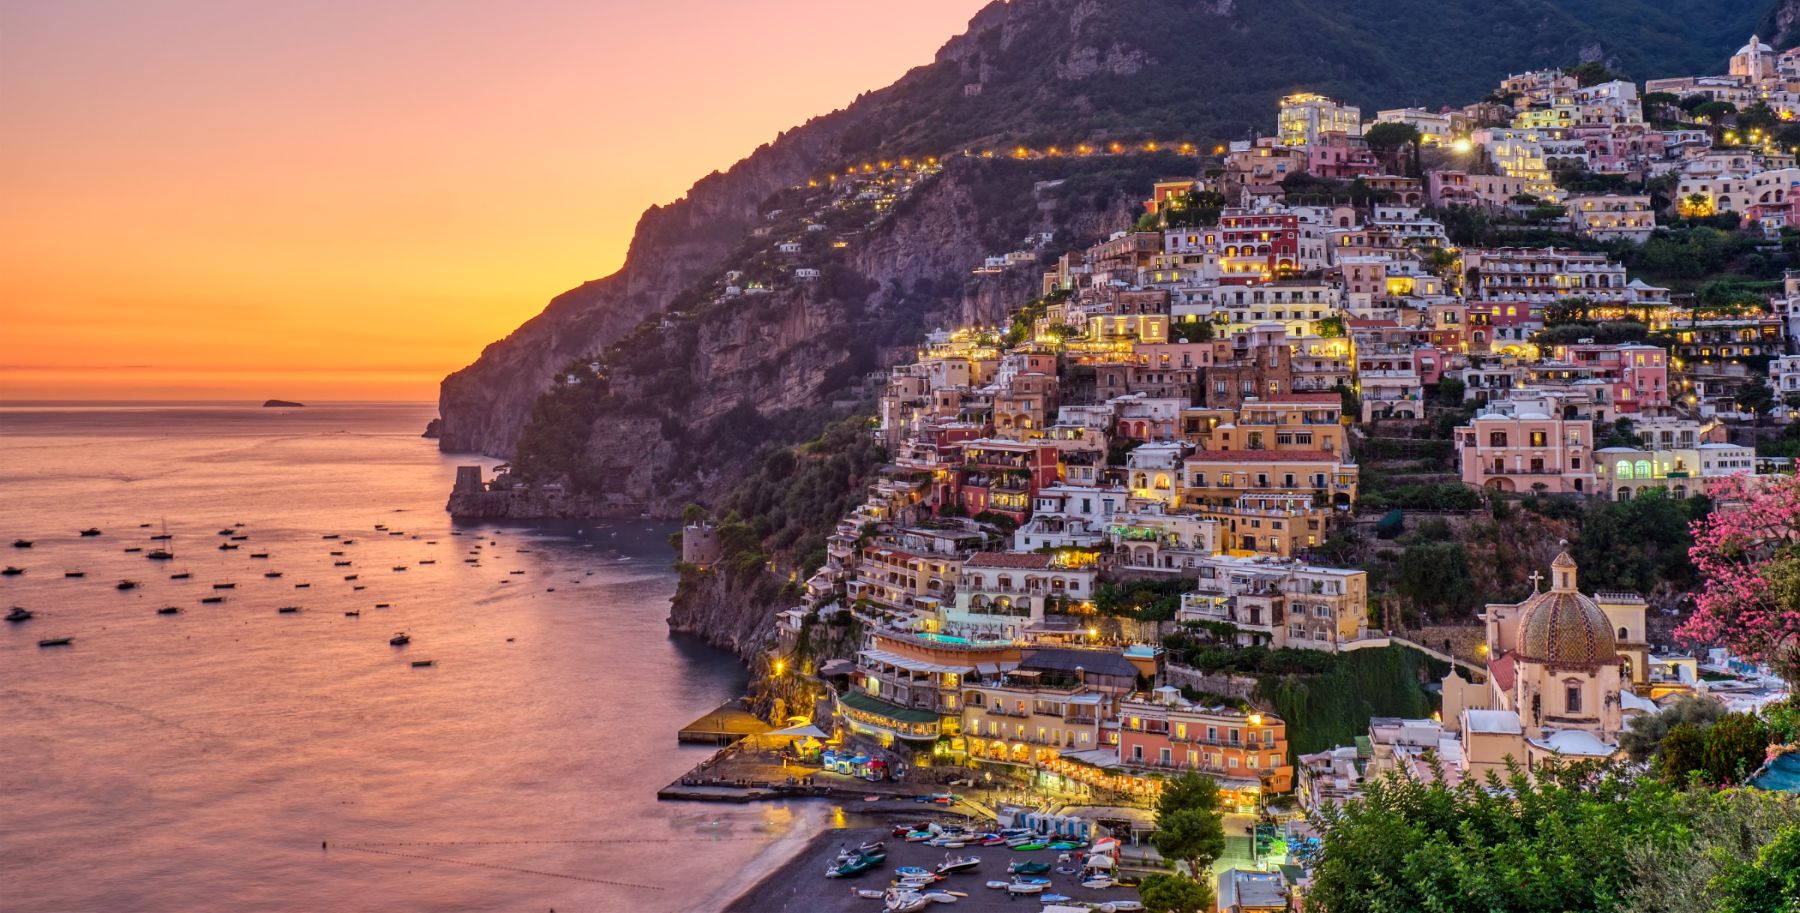 Several lodgings near the Amalfi coast in January